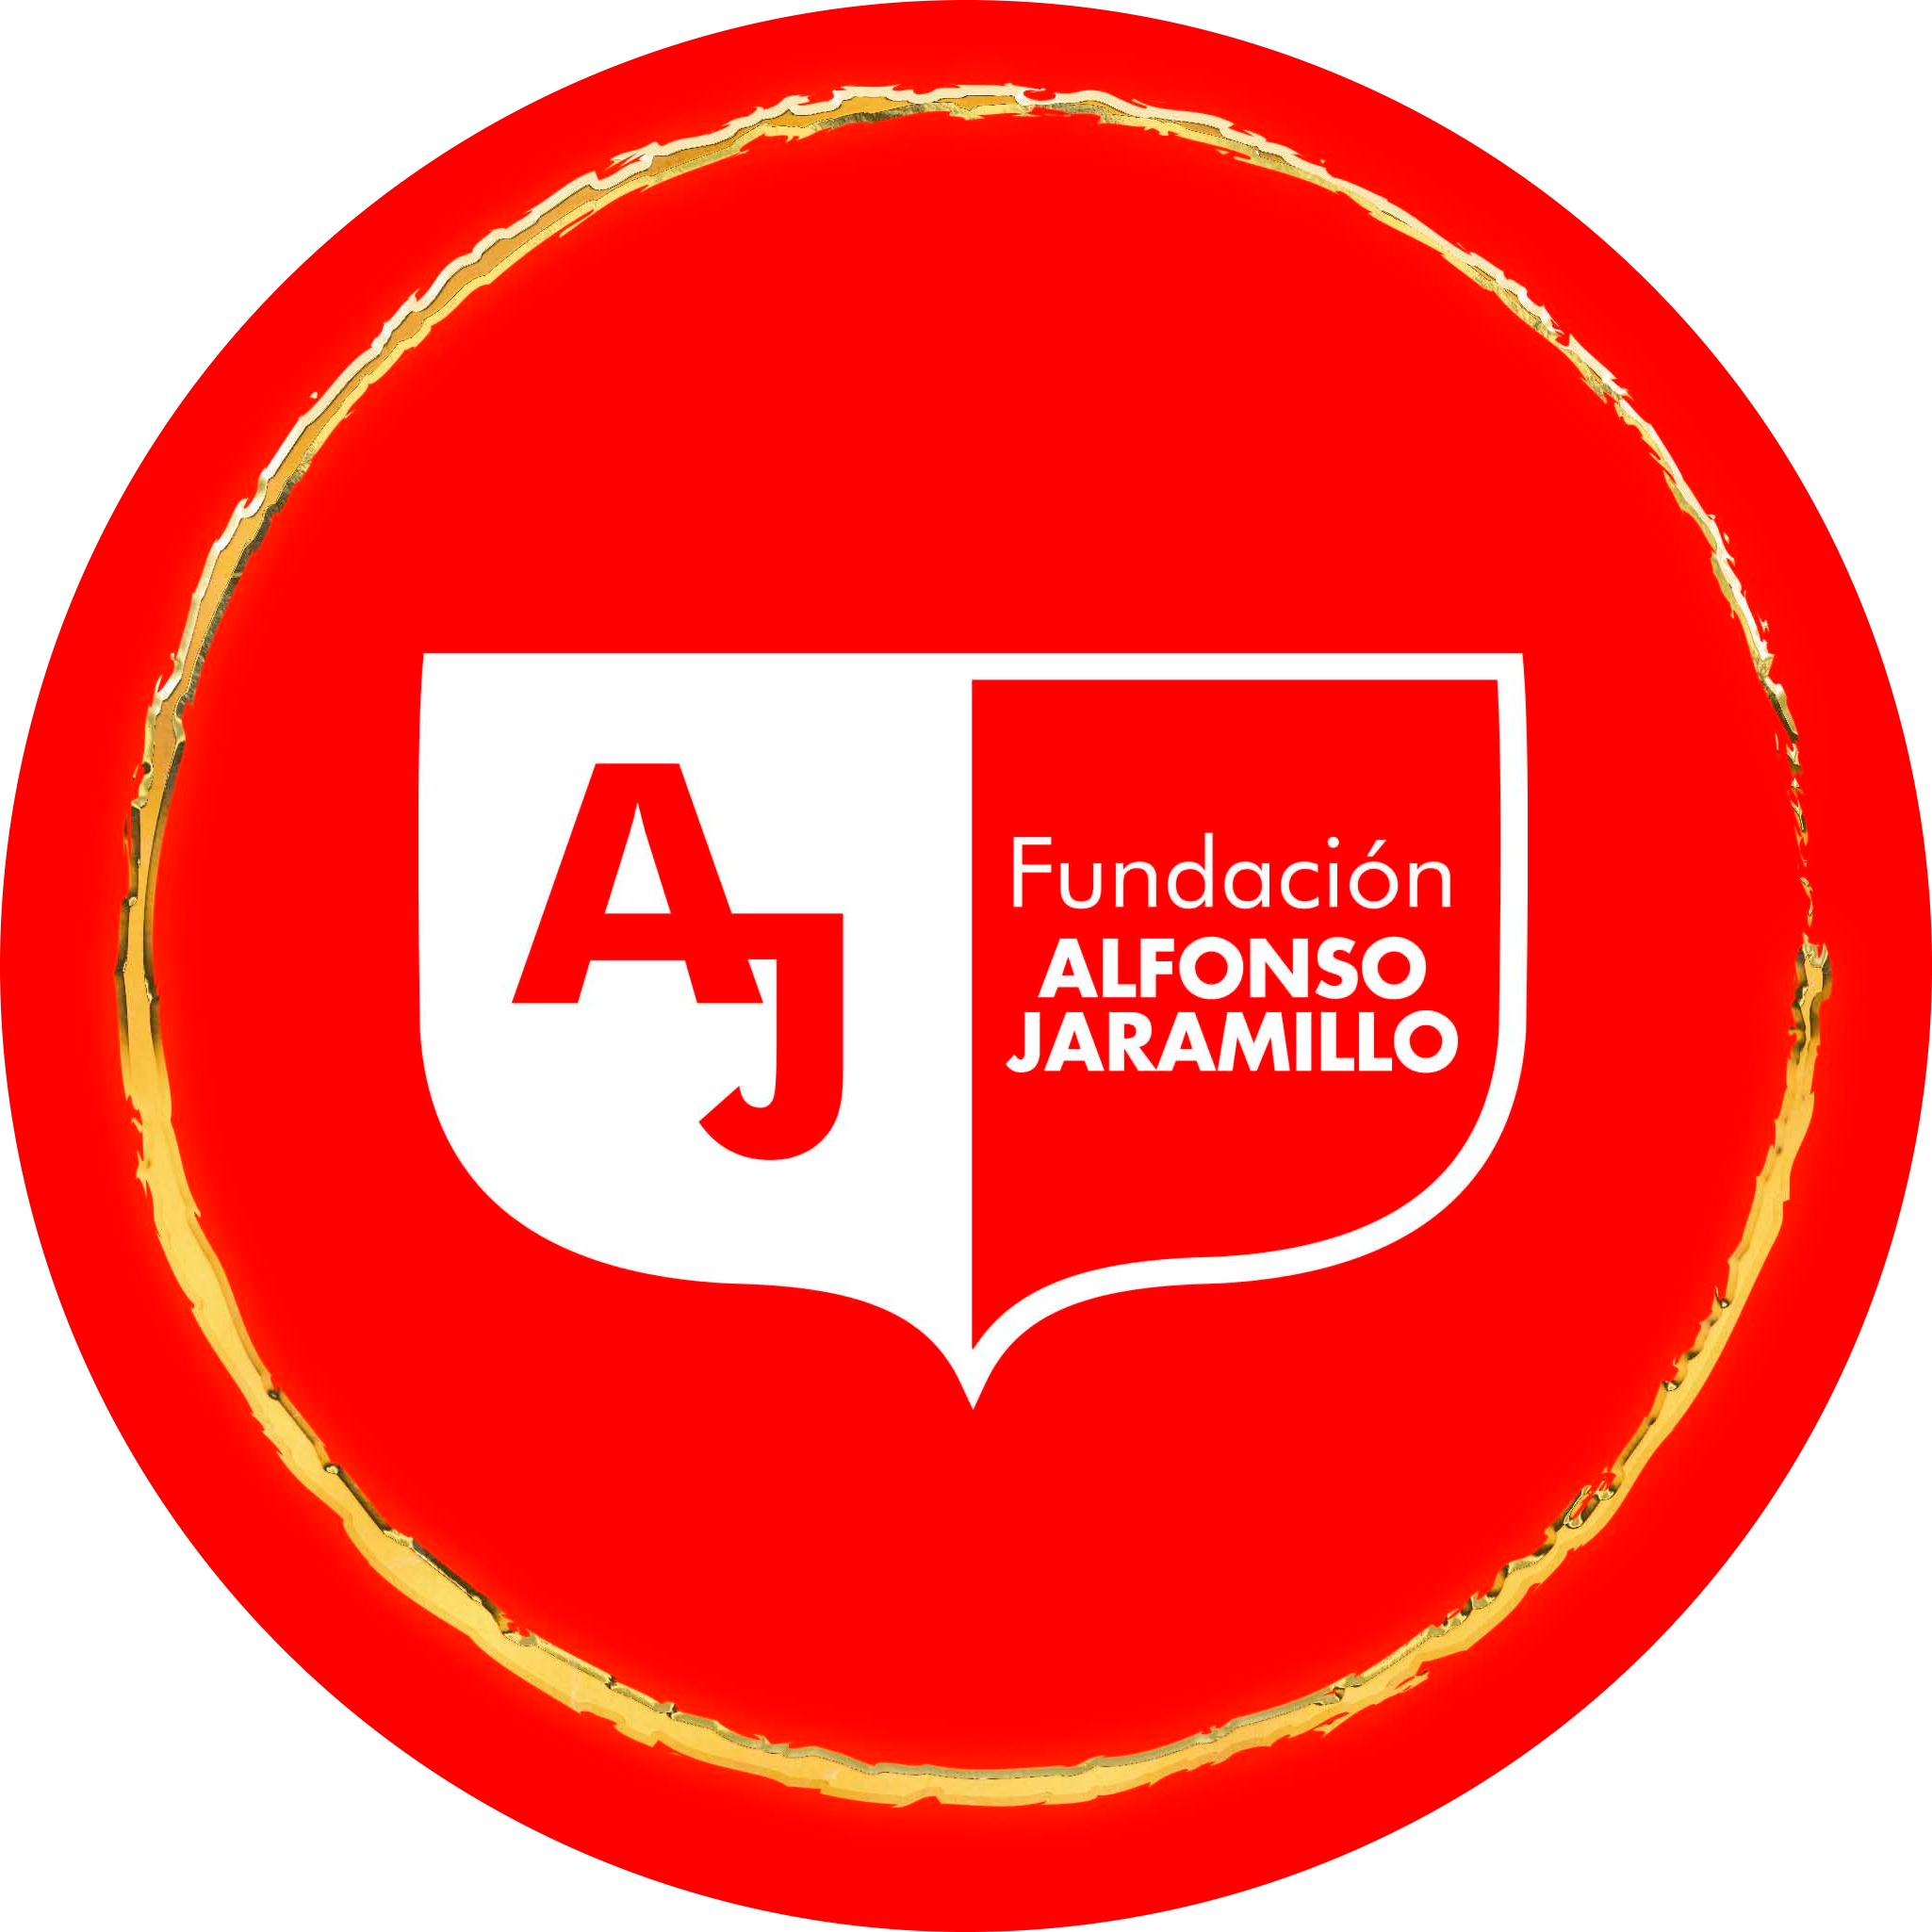 Fundación Alfonso Jaramillo logo